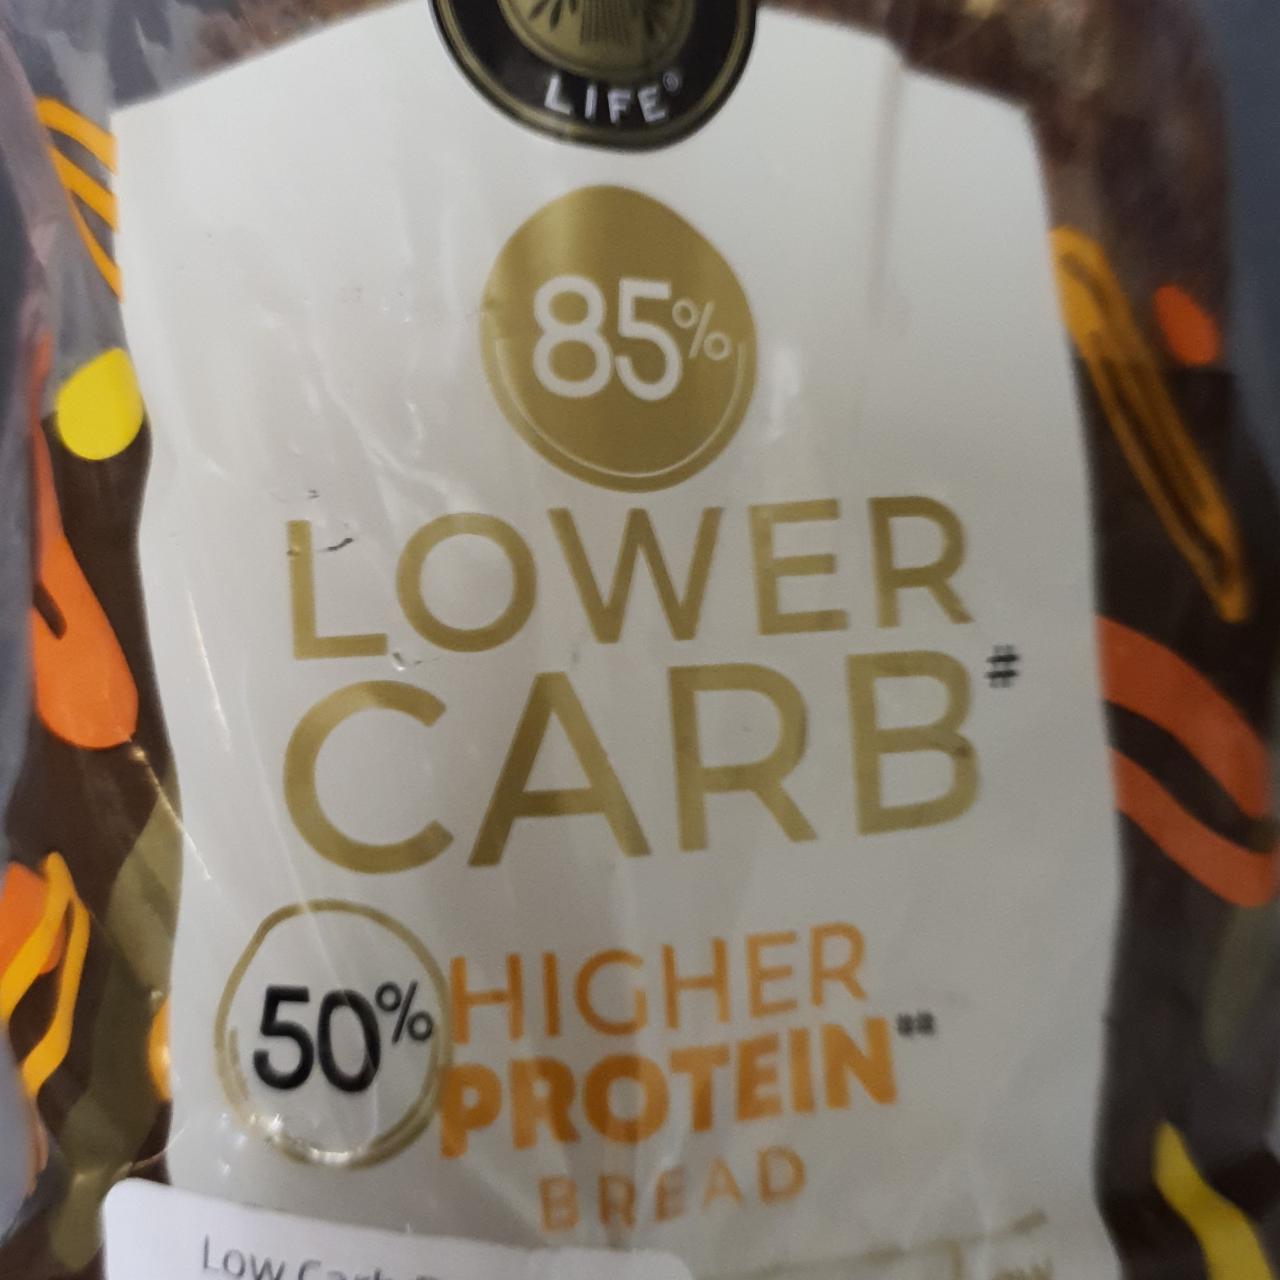 Fotografie - 85% lower carb bread